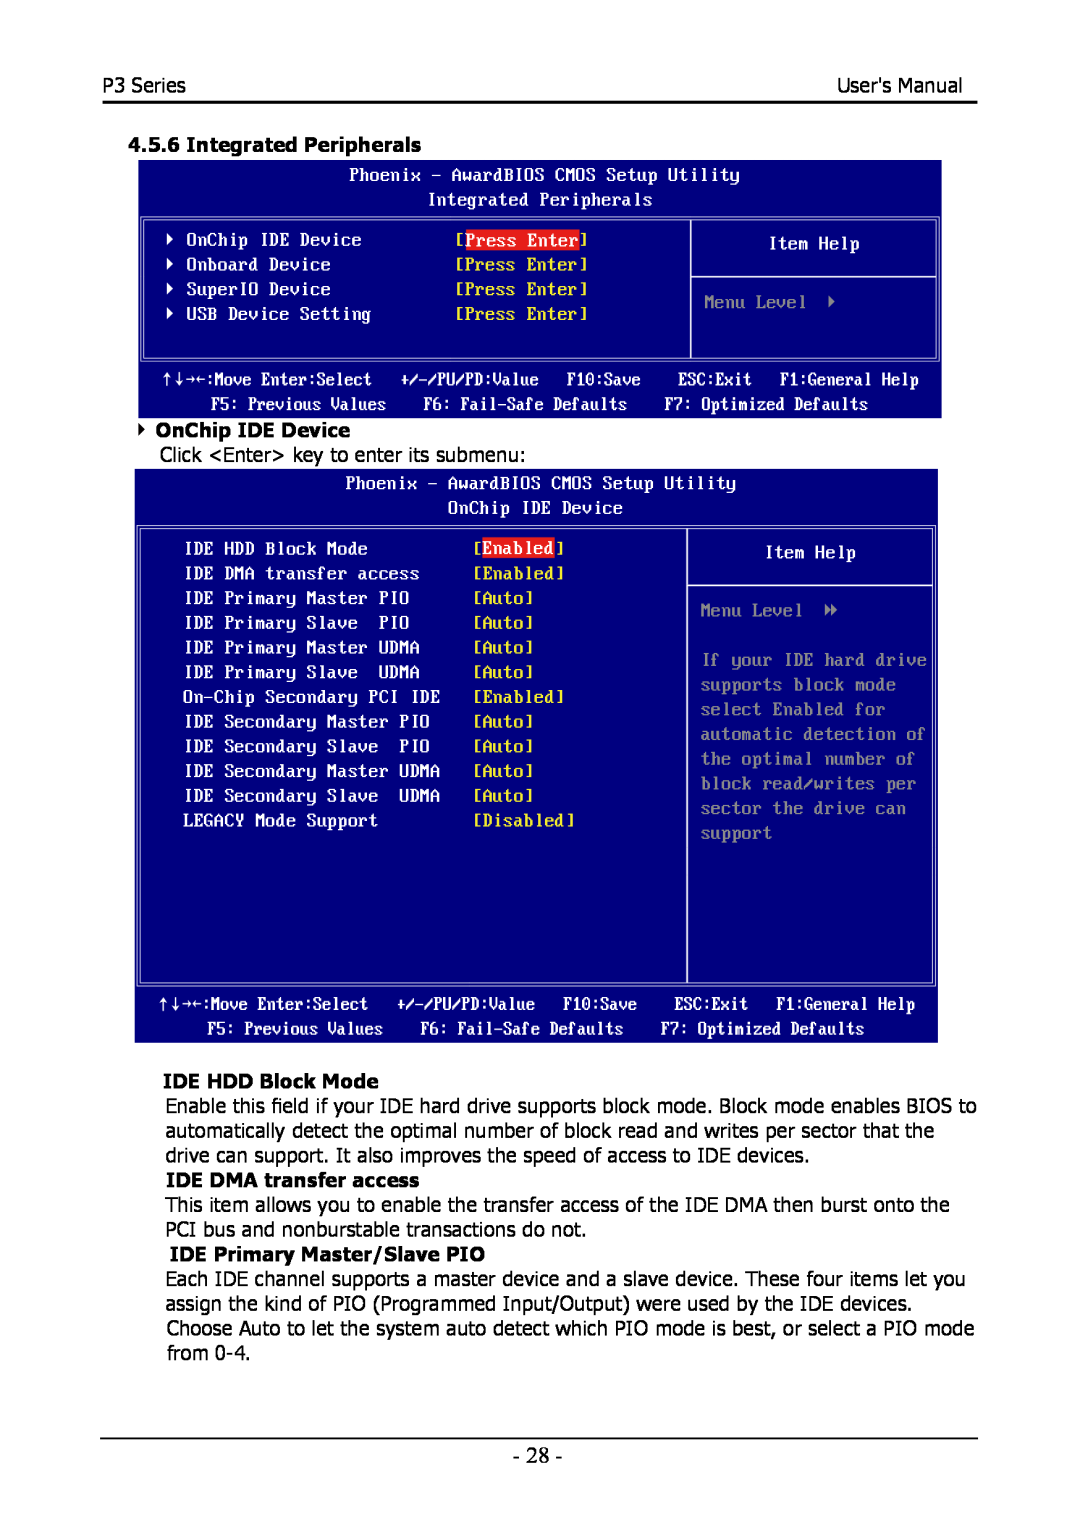 Intel Intel P35/P31 Socket LGA775 Processor Mainboard Integrated Peripherals, OnChip IDE Device, IDE HDD Block Mode 